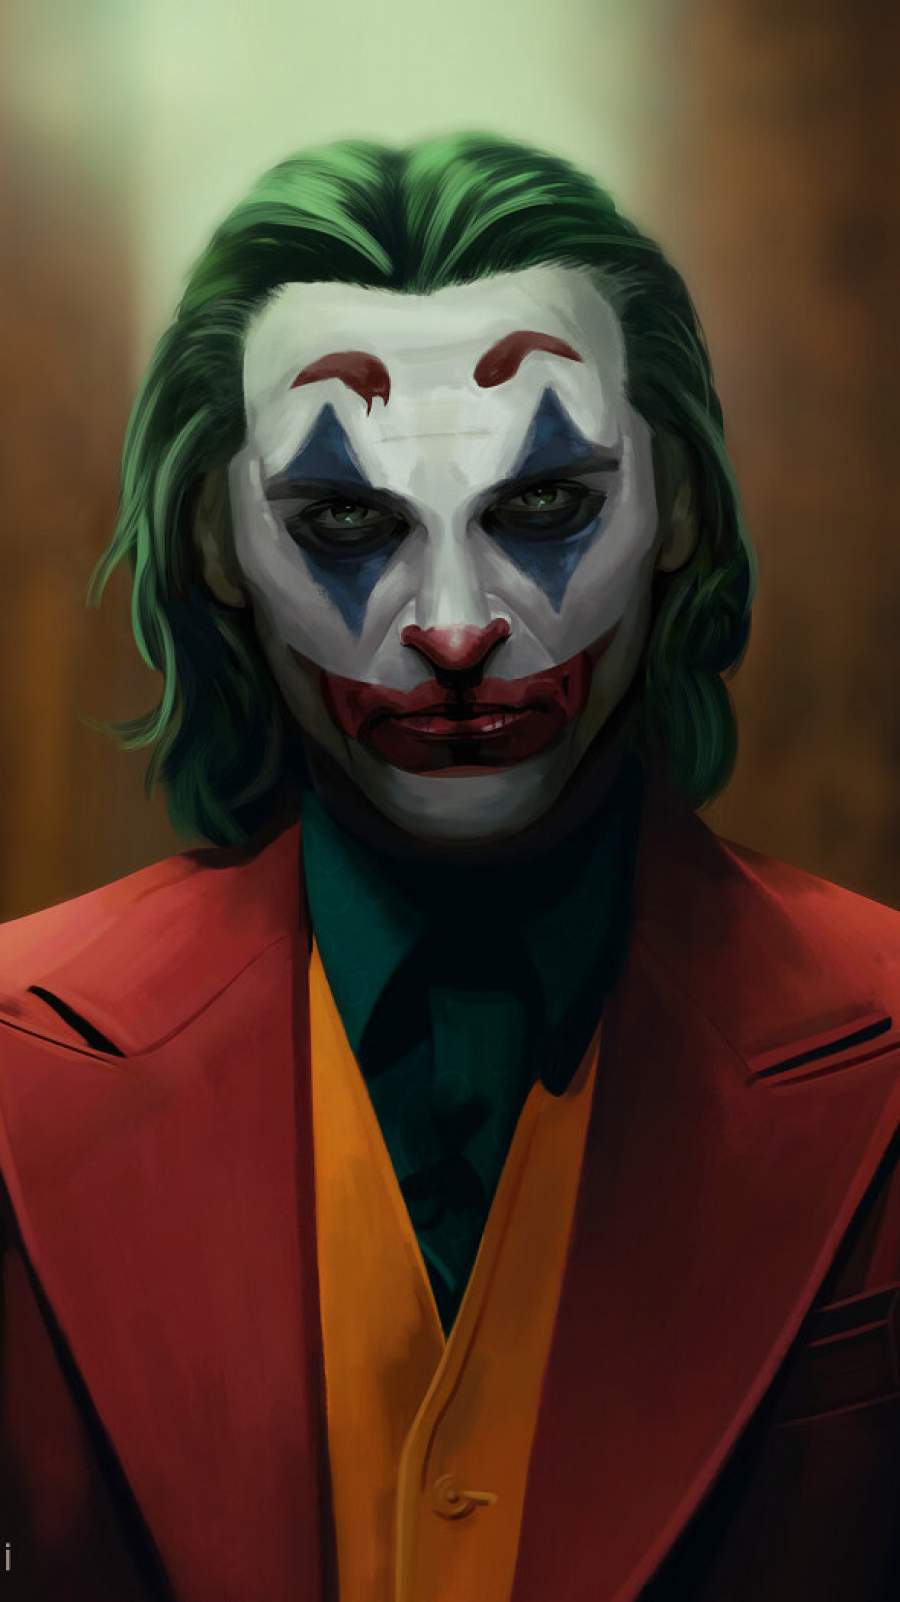 Joker Painting - IPhone Wallpapers : iPhone Wallpapers